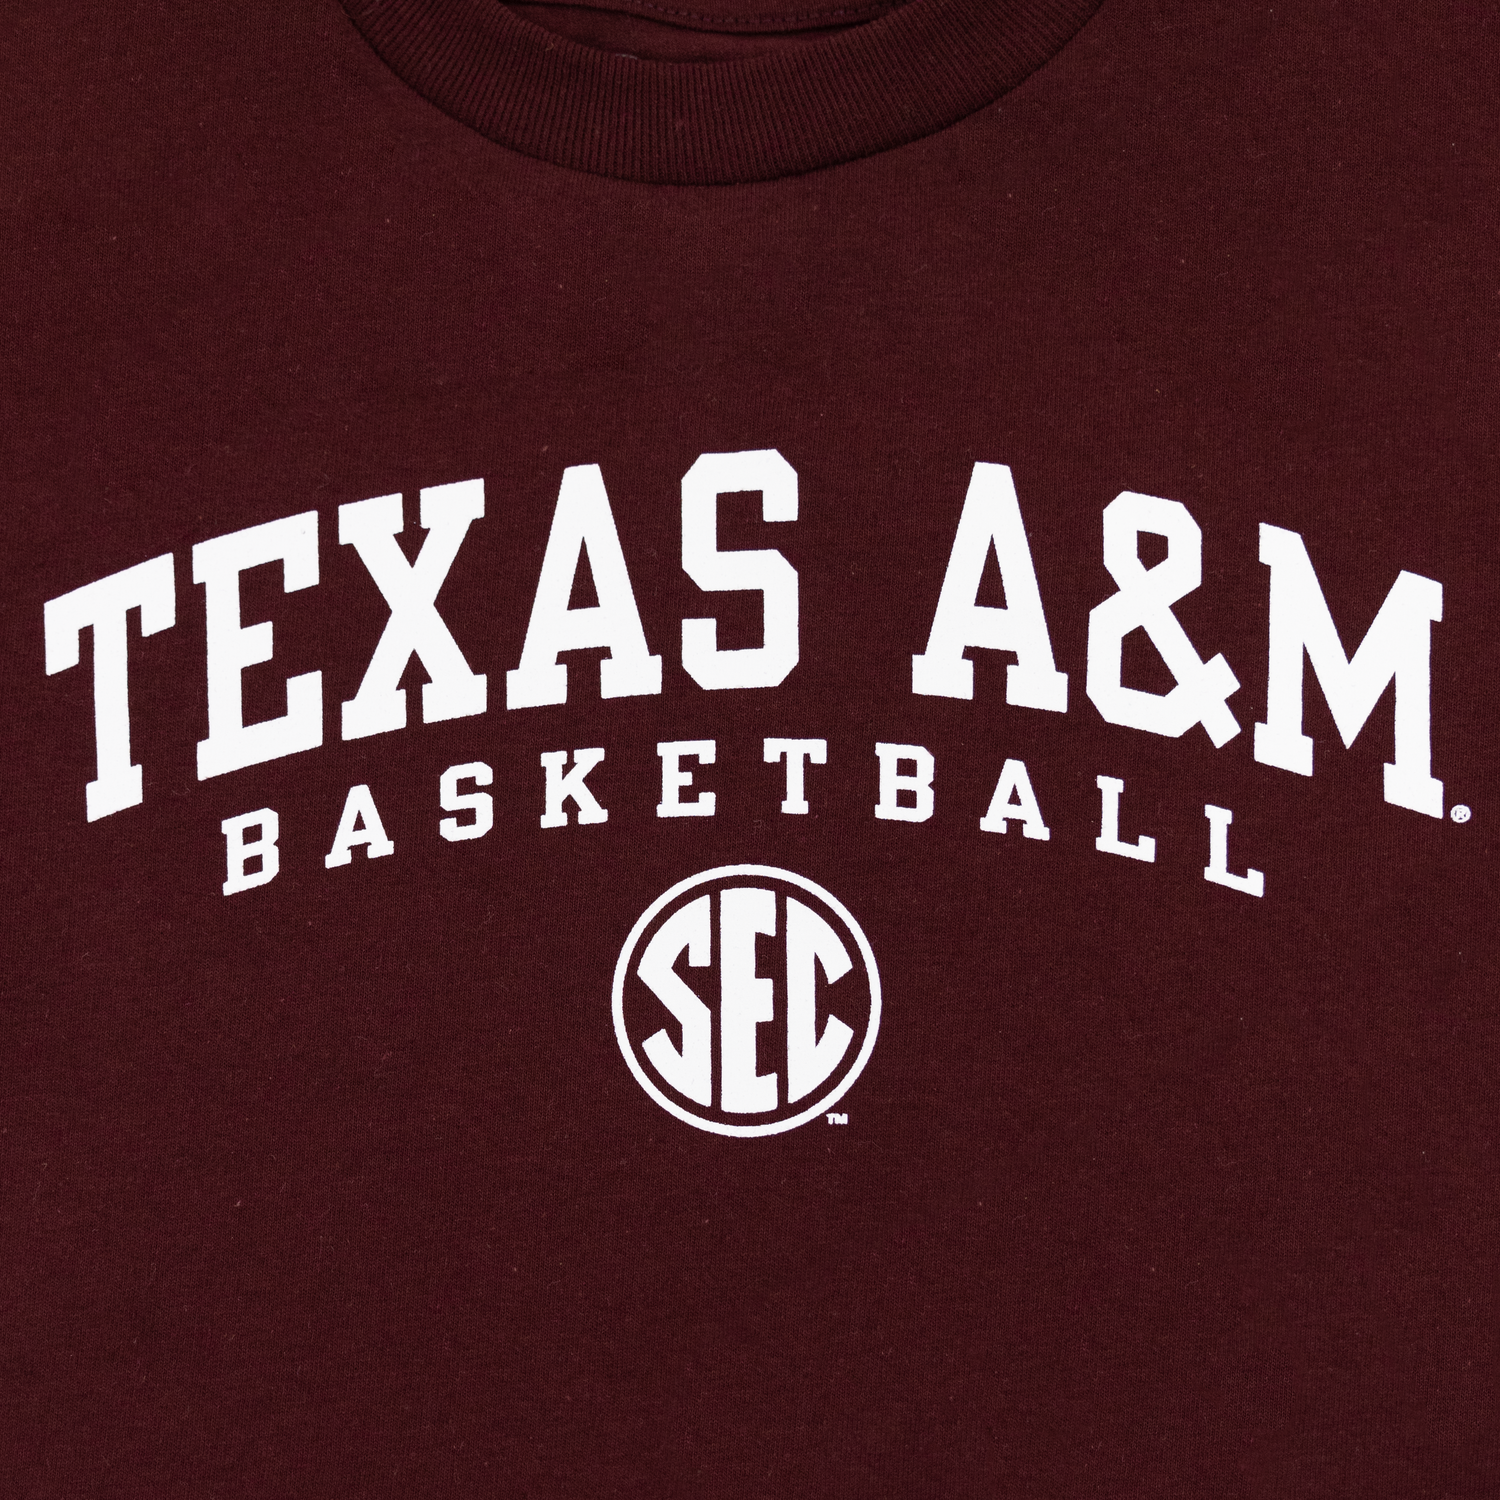 Texas A&M Youth Basketball SEC T-Shirt